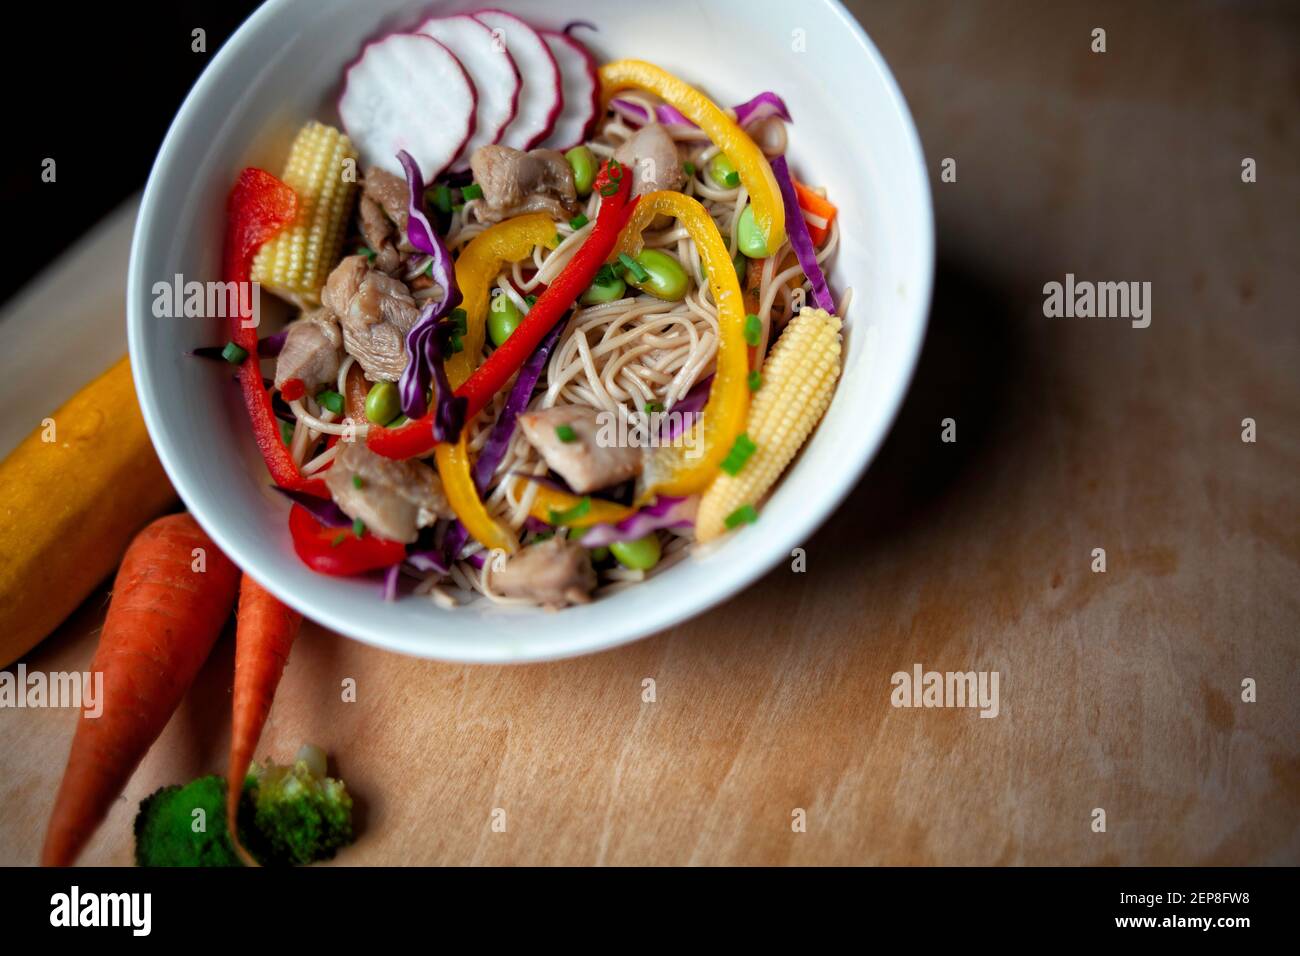 Plates of healthy, balanced Asian food. Stock Photo